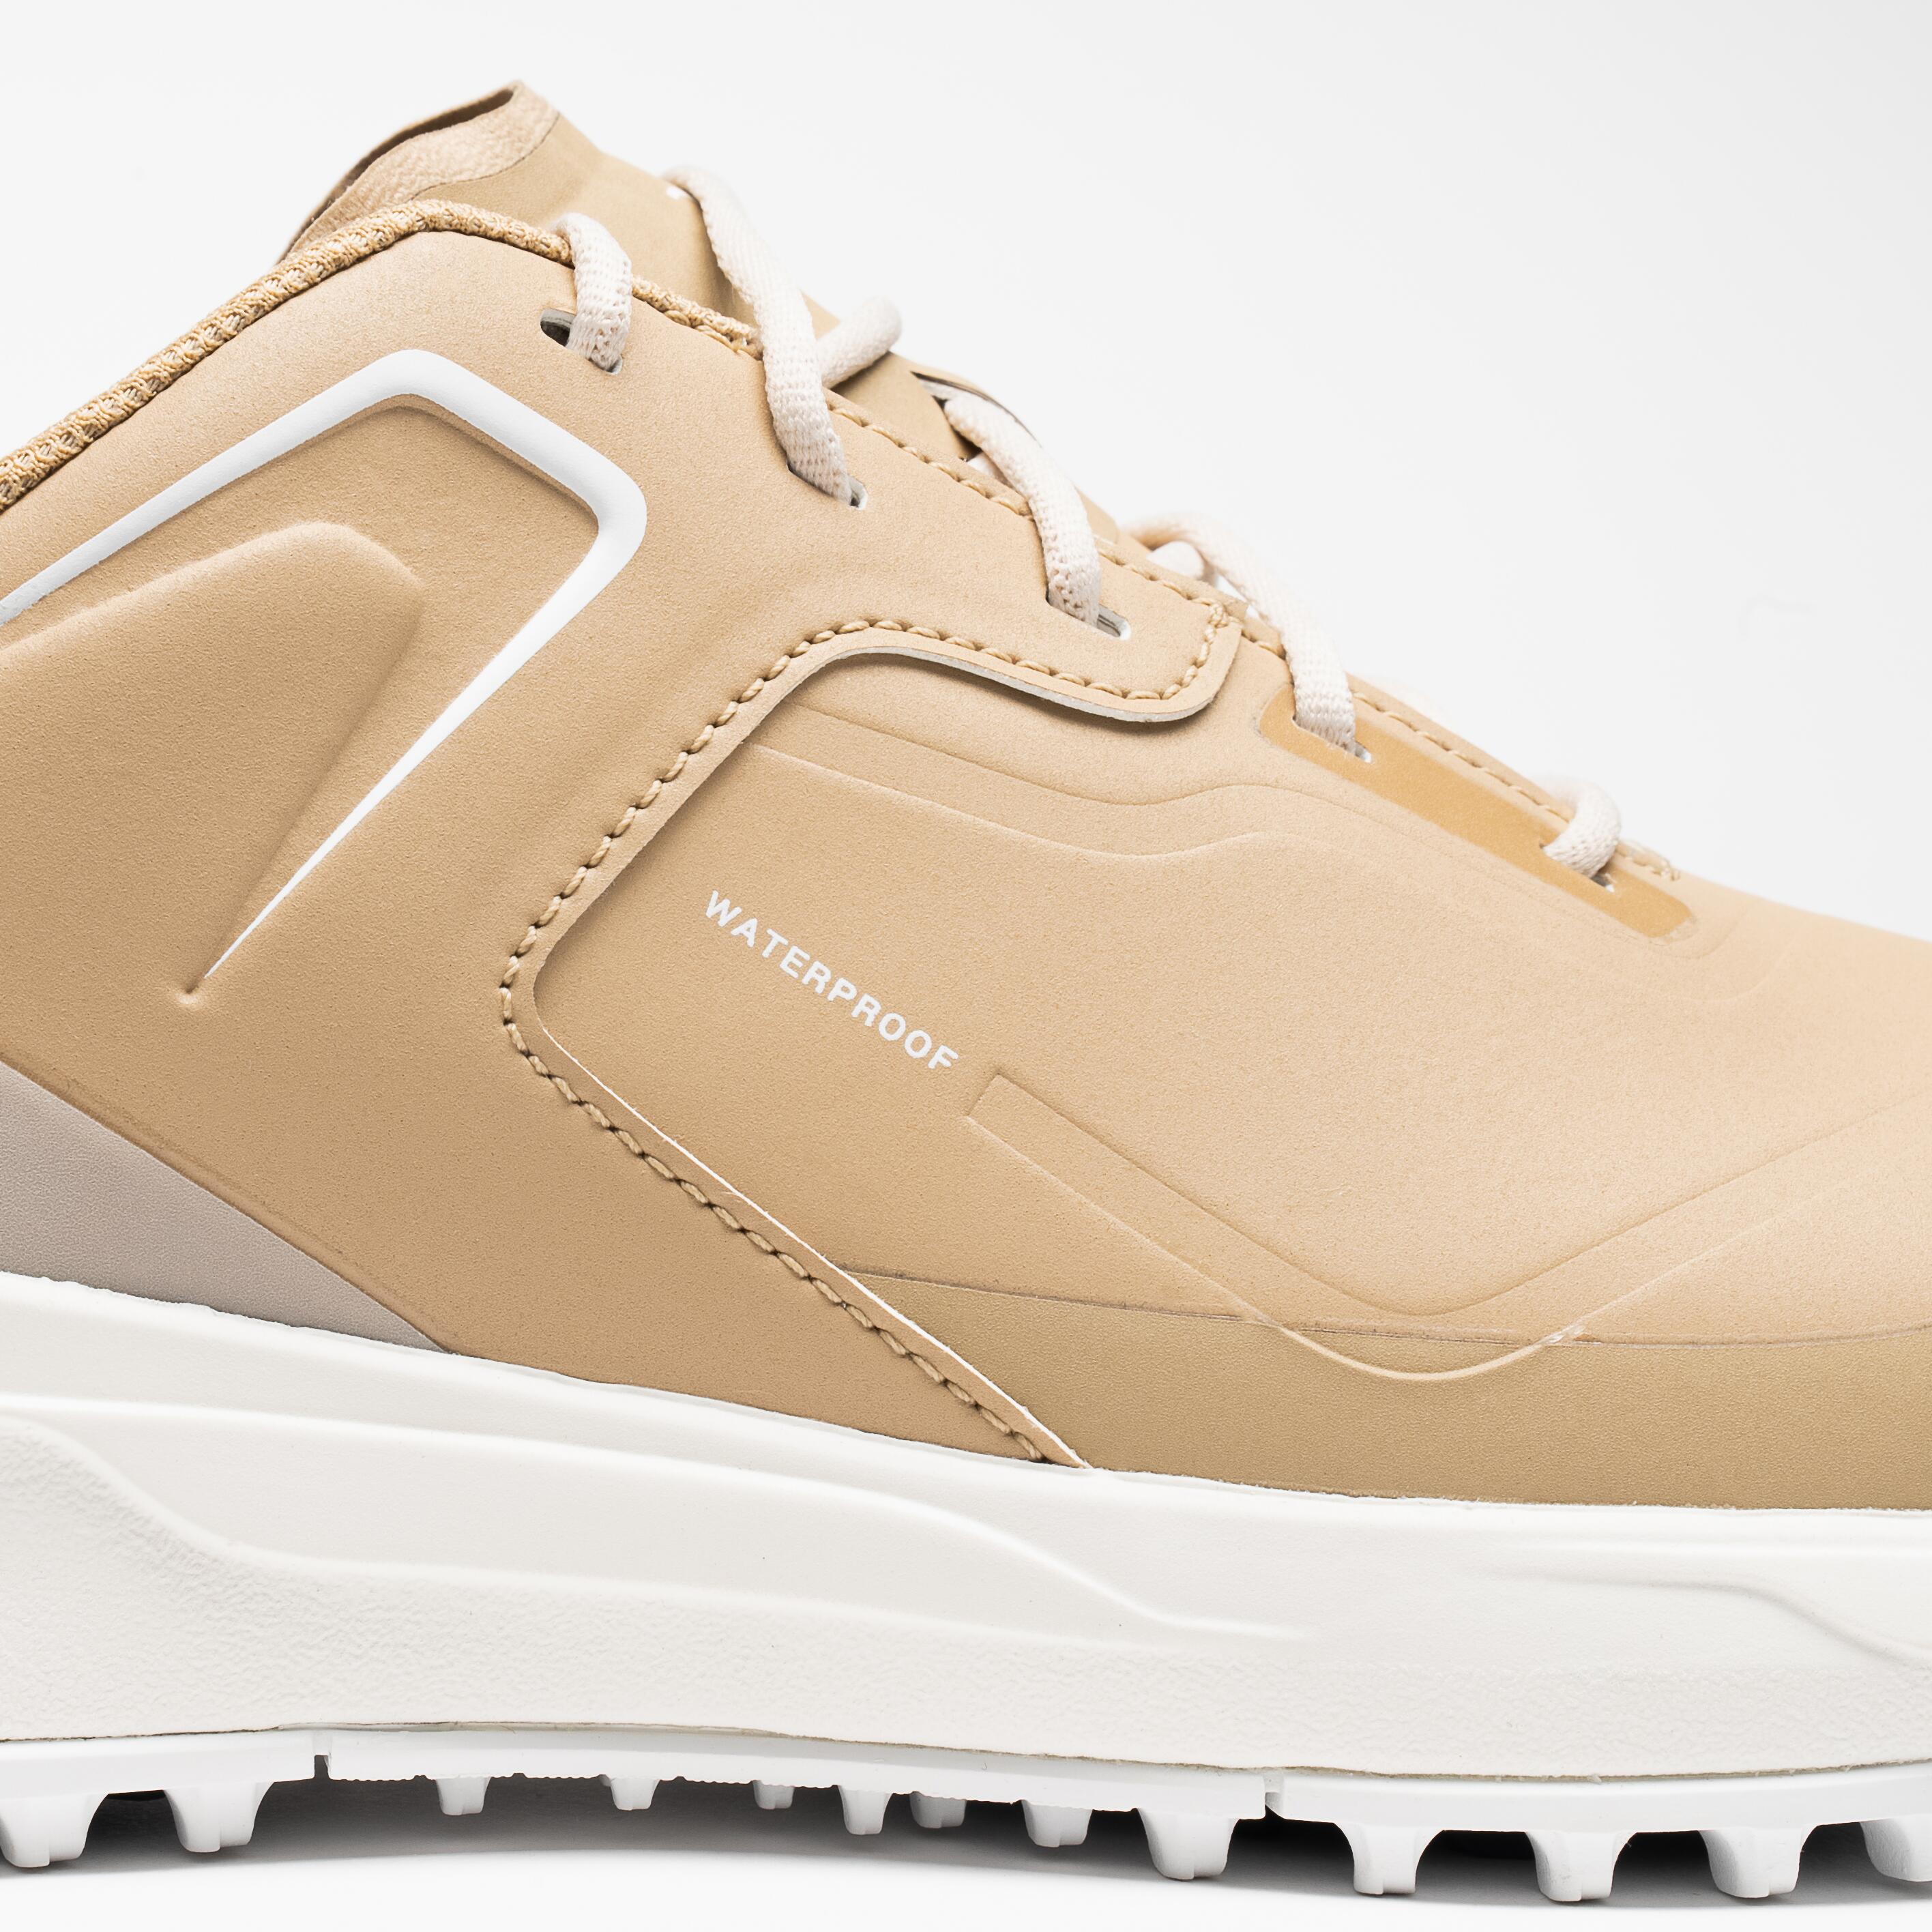 Men's Waterproof Golf Shoes - MW 500 Beige 5/7